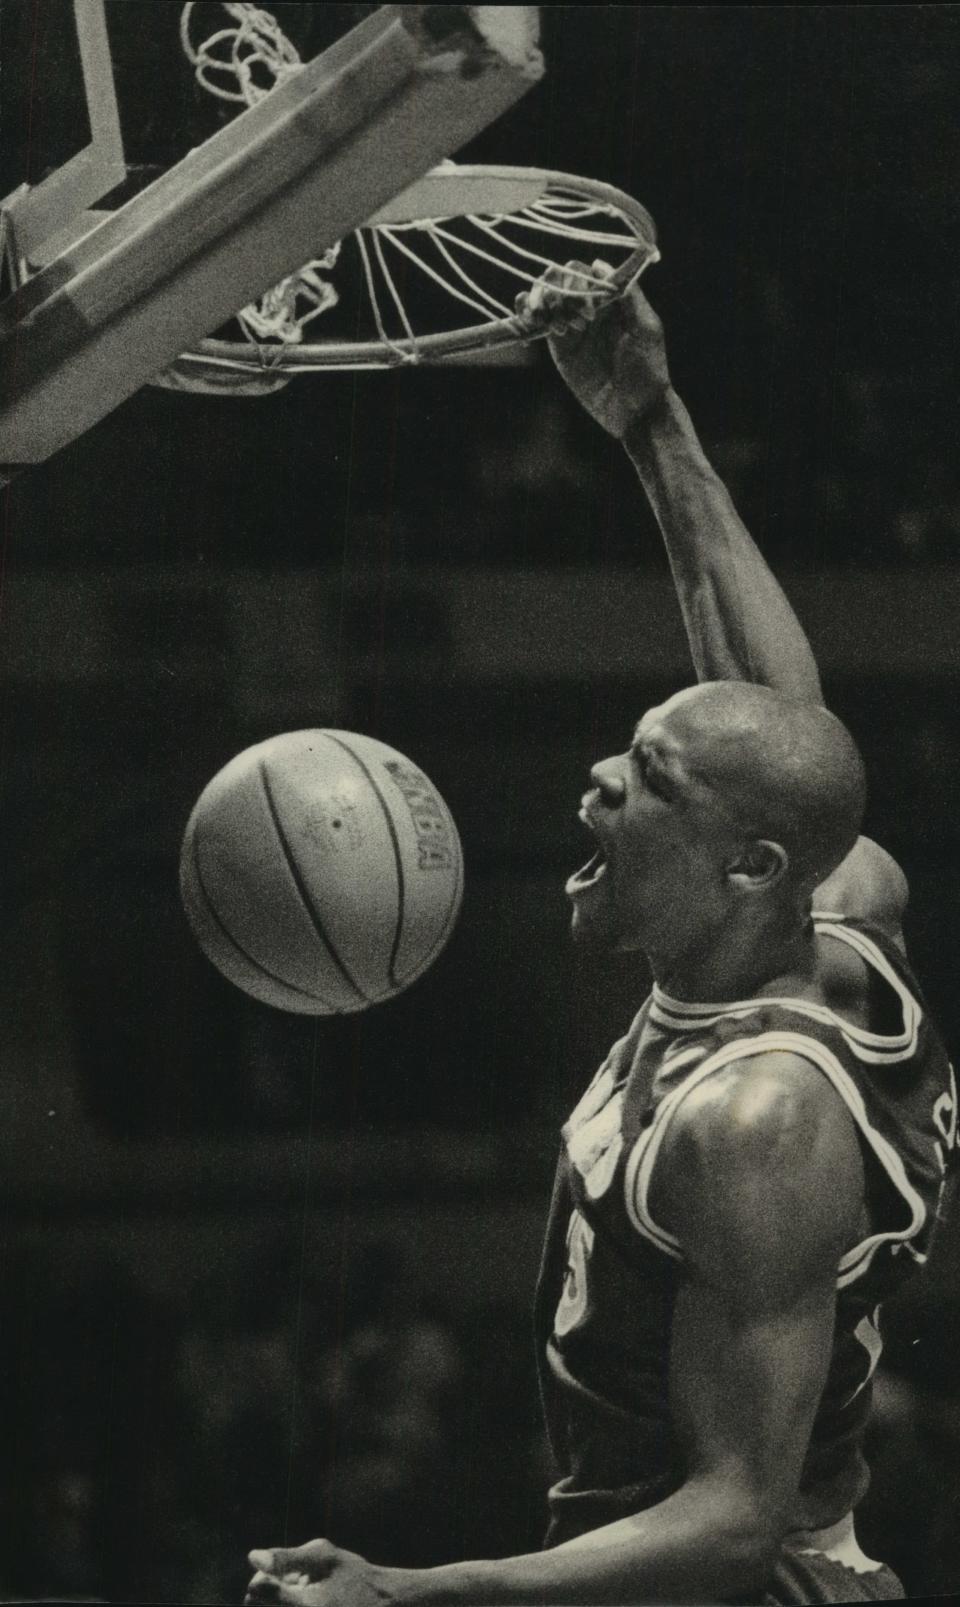 Golden State's Latrell Sprewell dunks against the Bucks at the Bradley Center in 1994.